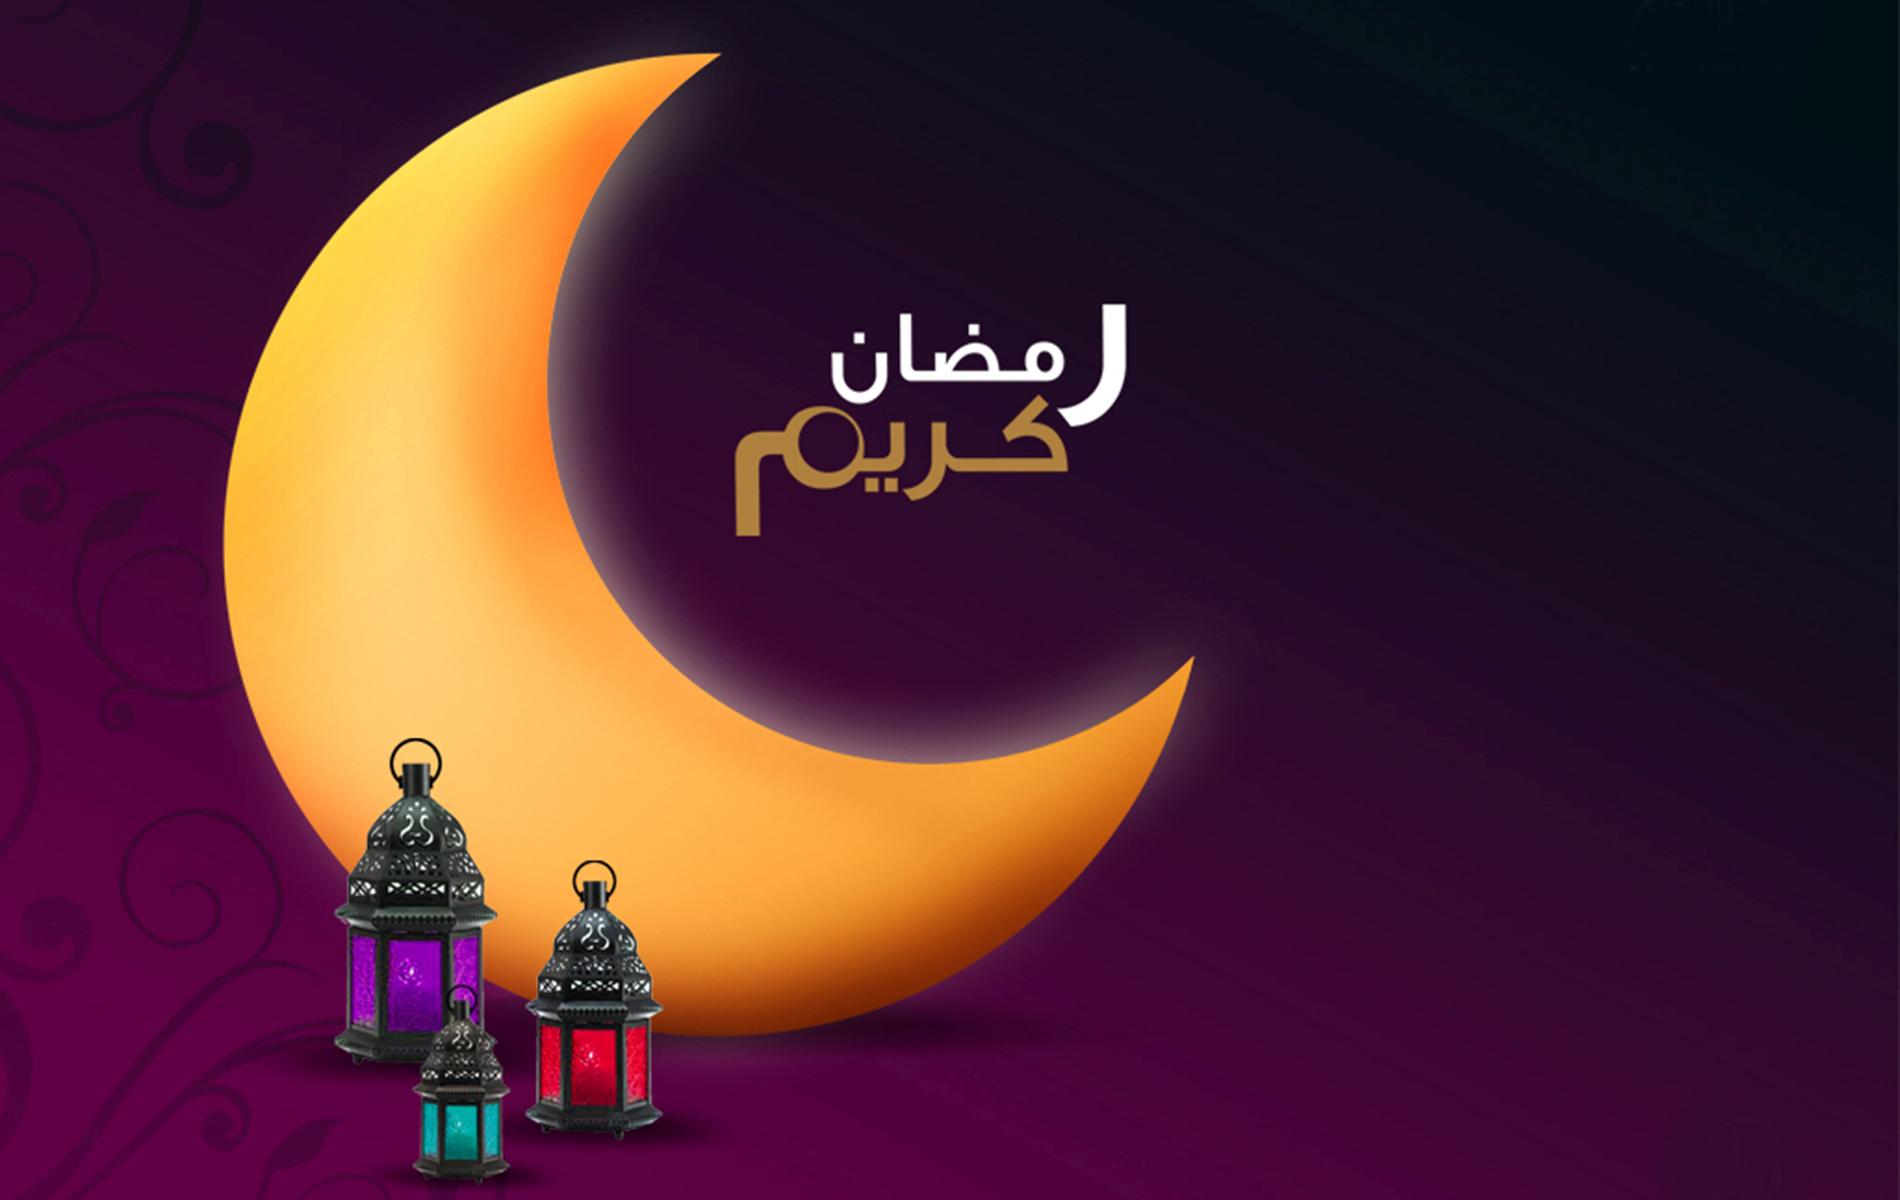 تاريخ شهر رمضان 2010 relatif